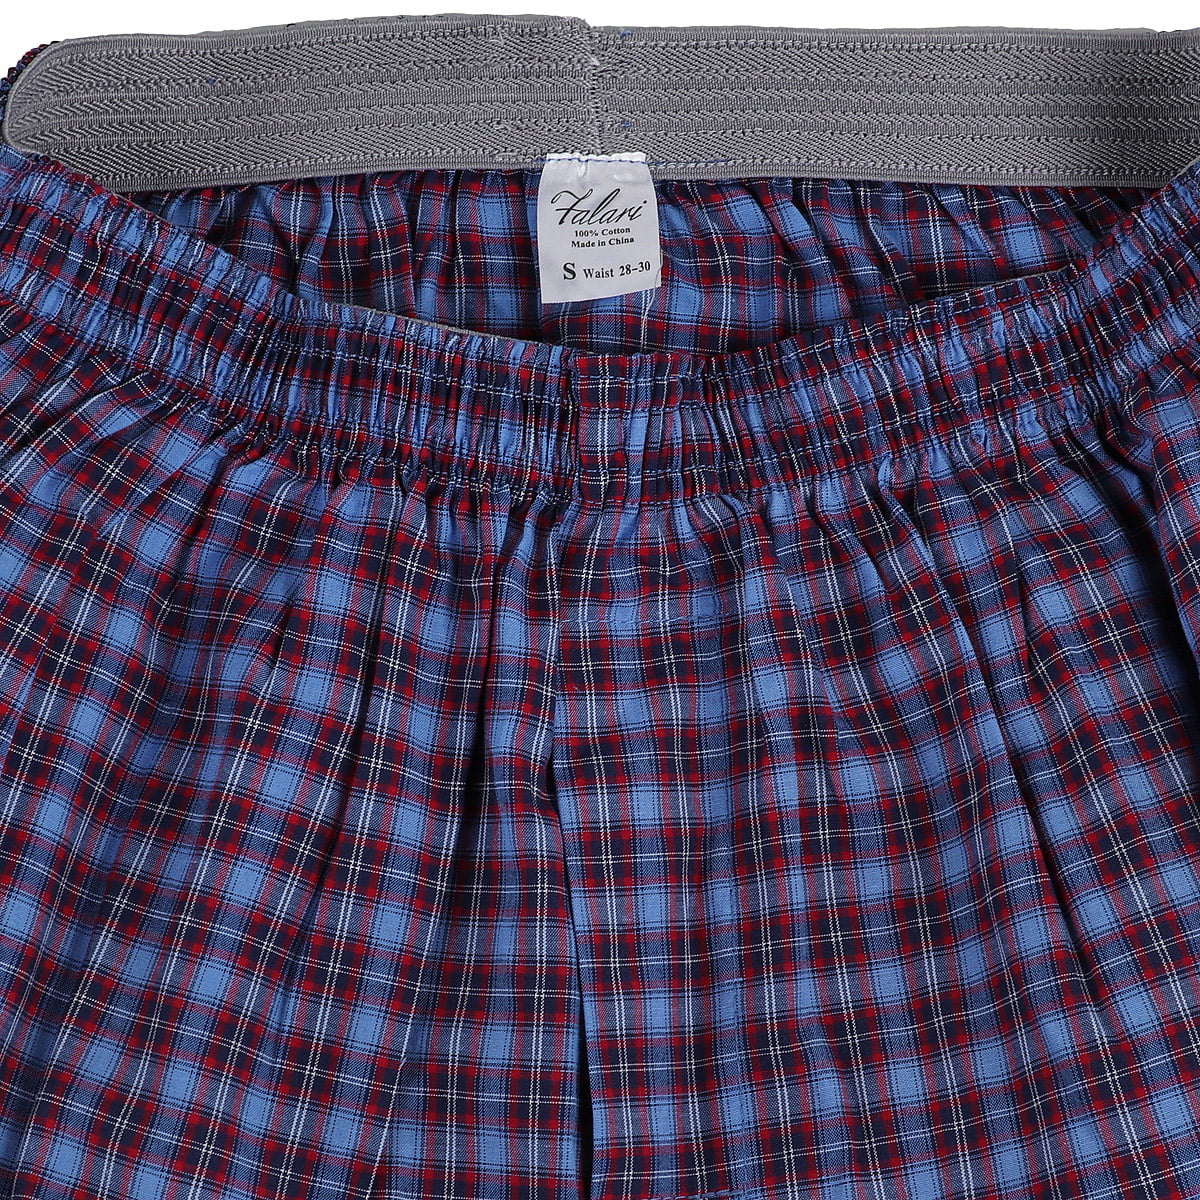 1-12 Pack Premium 100% Egyptian Extra Soft Cotton Mens Boxer Shorts  Underwear